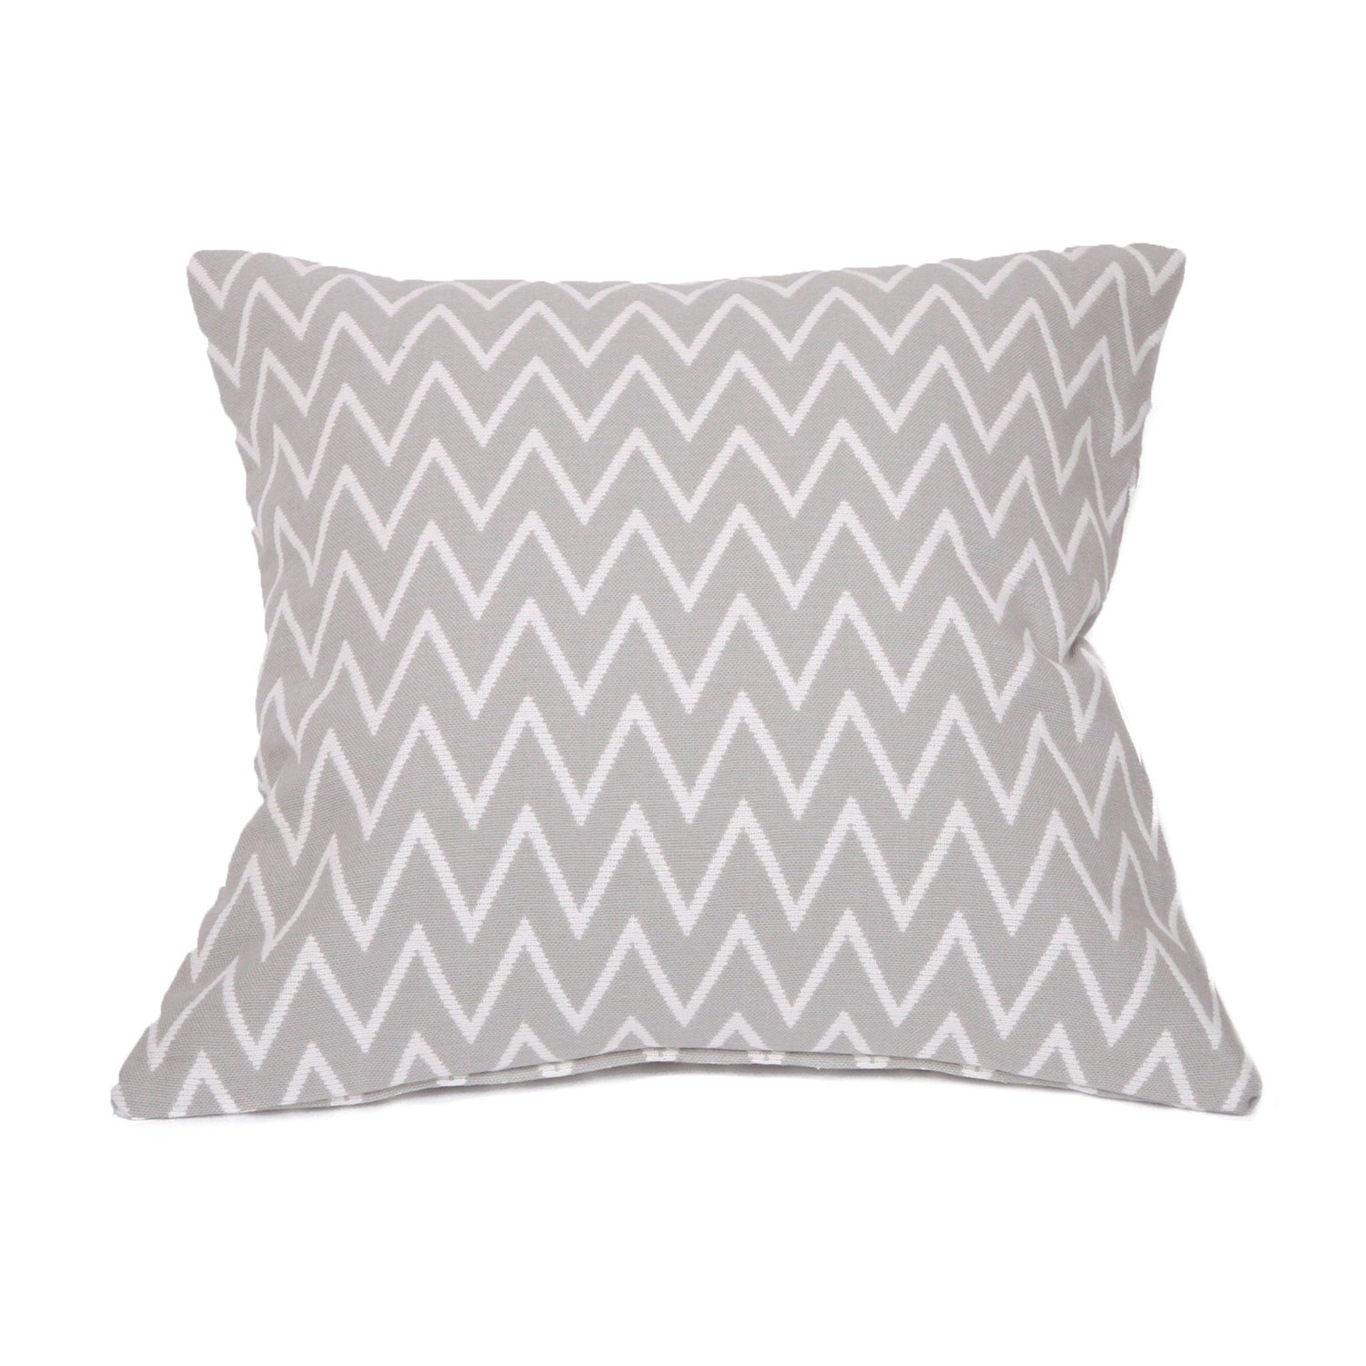 Zigzag Cushion Cover 50x50cm, Grey/White